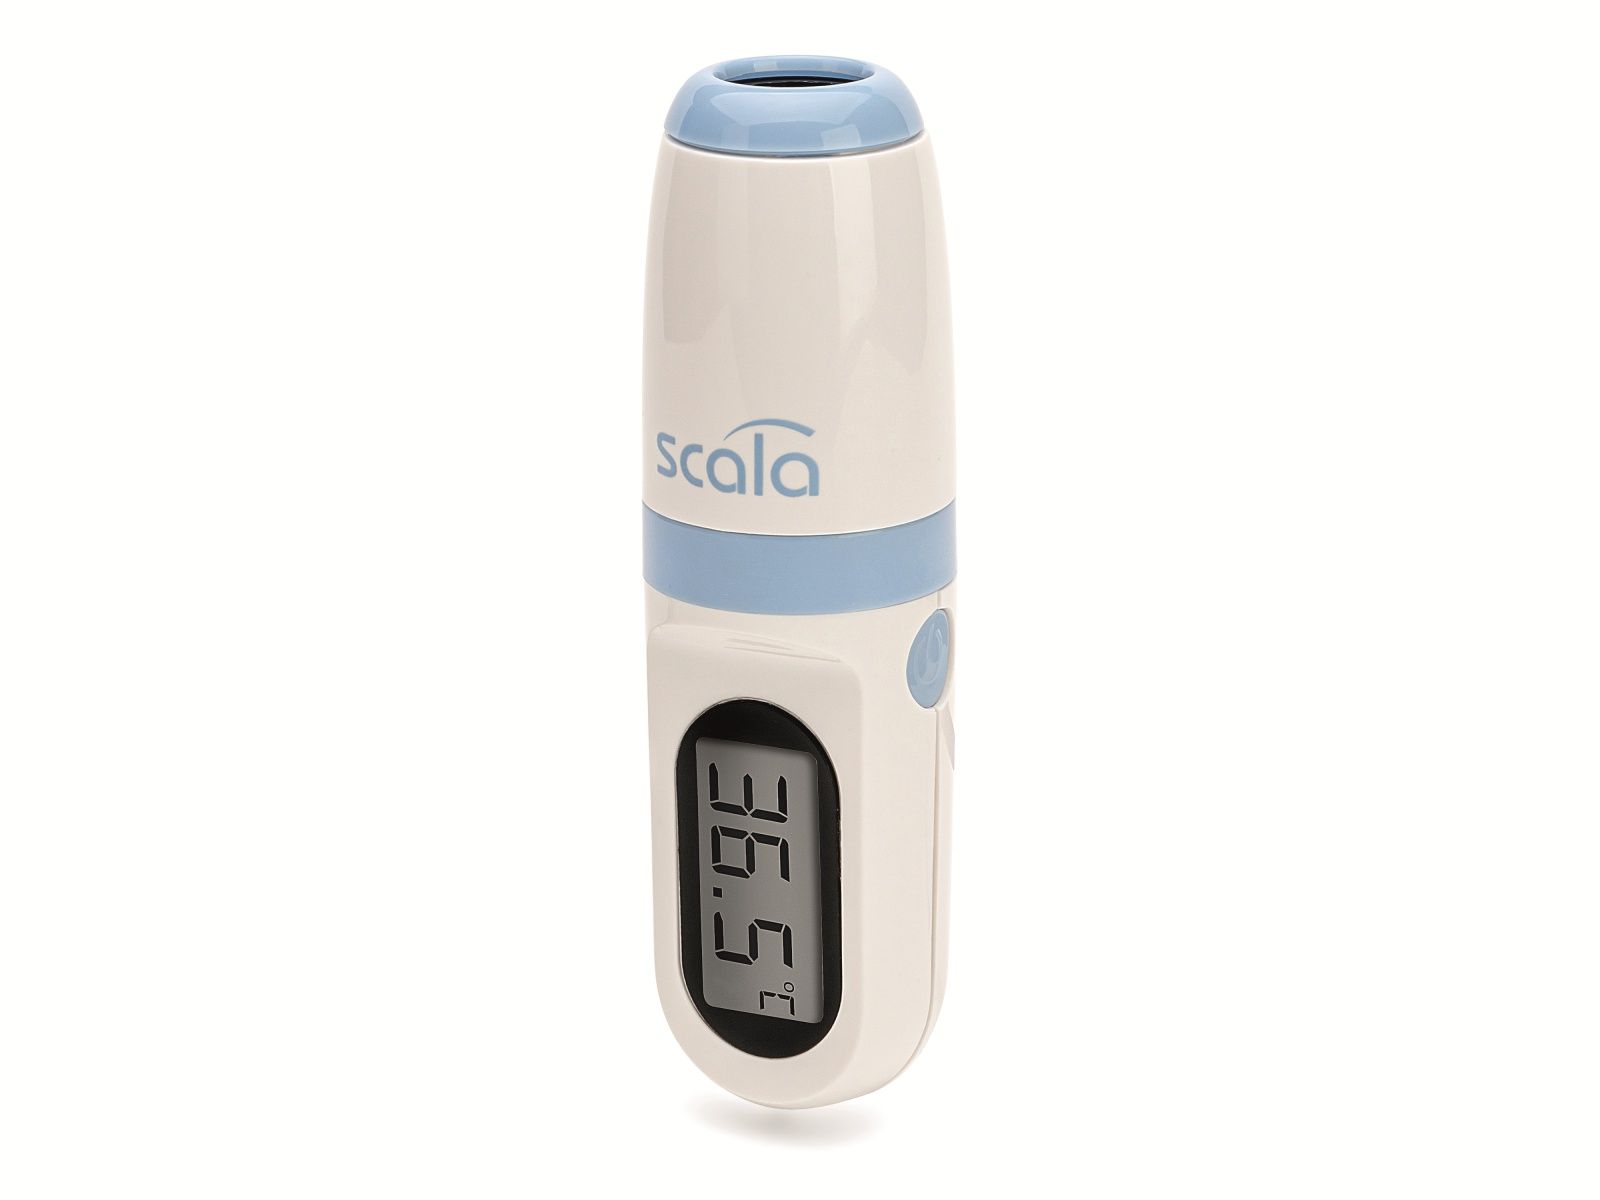 A012 Scala - Thermometer - Infrarot - Stirn - Sc 8271 - Berührungslos - Neu&ovp